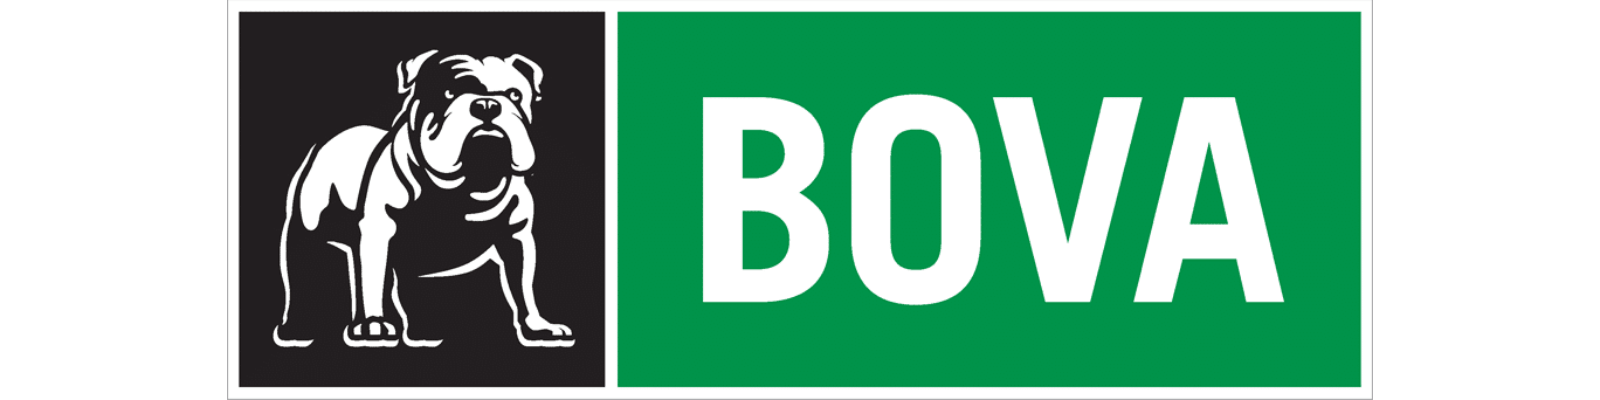 bova brand logo of safety products supplier - landmarkcongo sarl